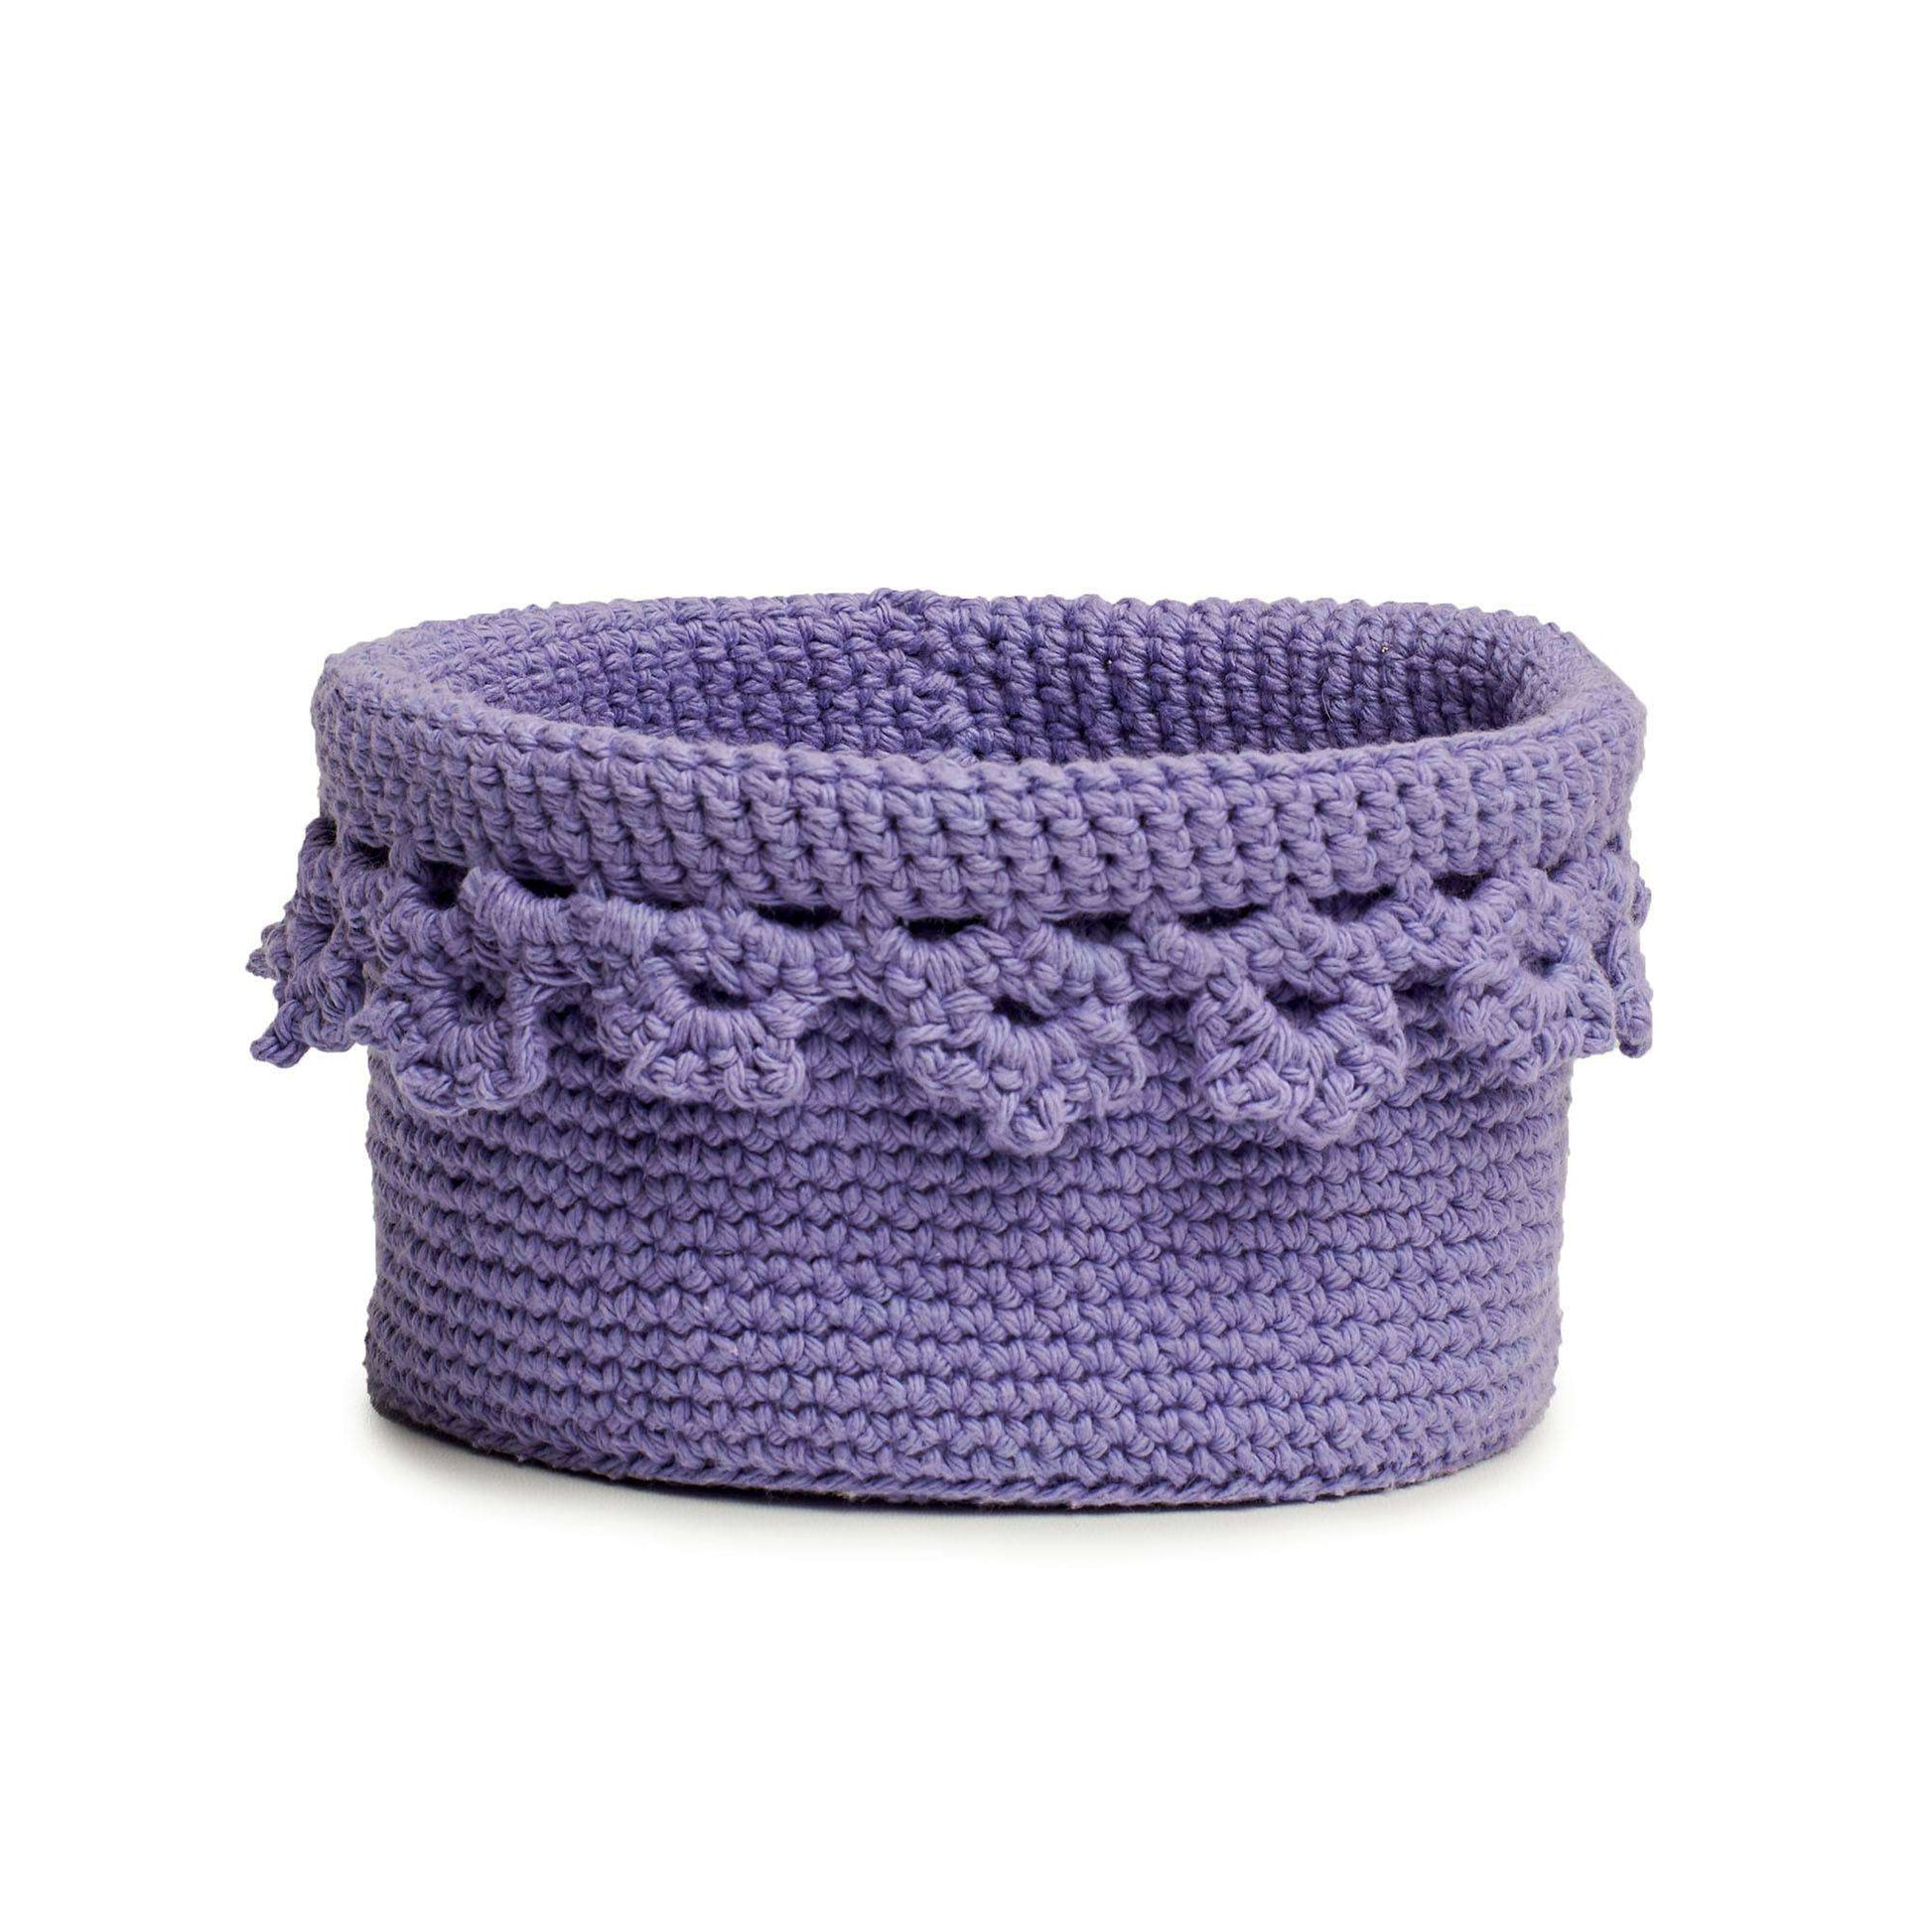 Free Lily Floral Edge Crochet Basket Pattern